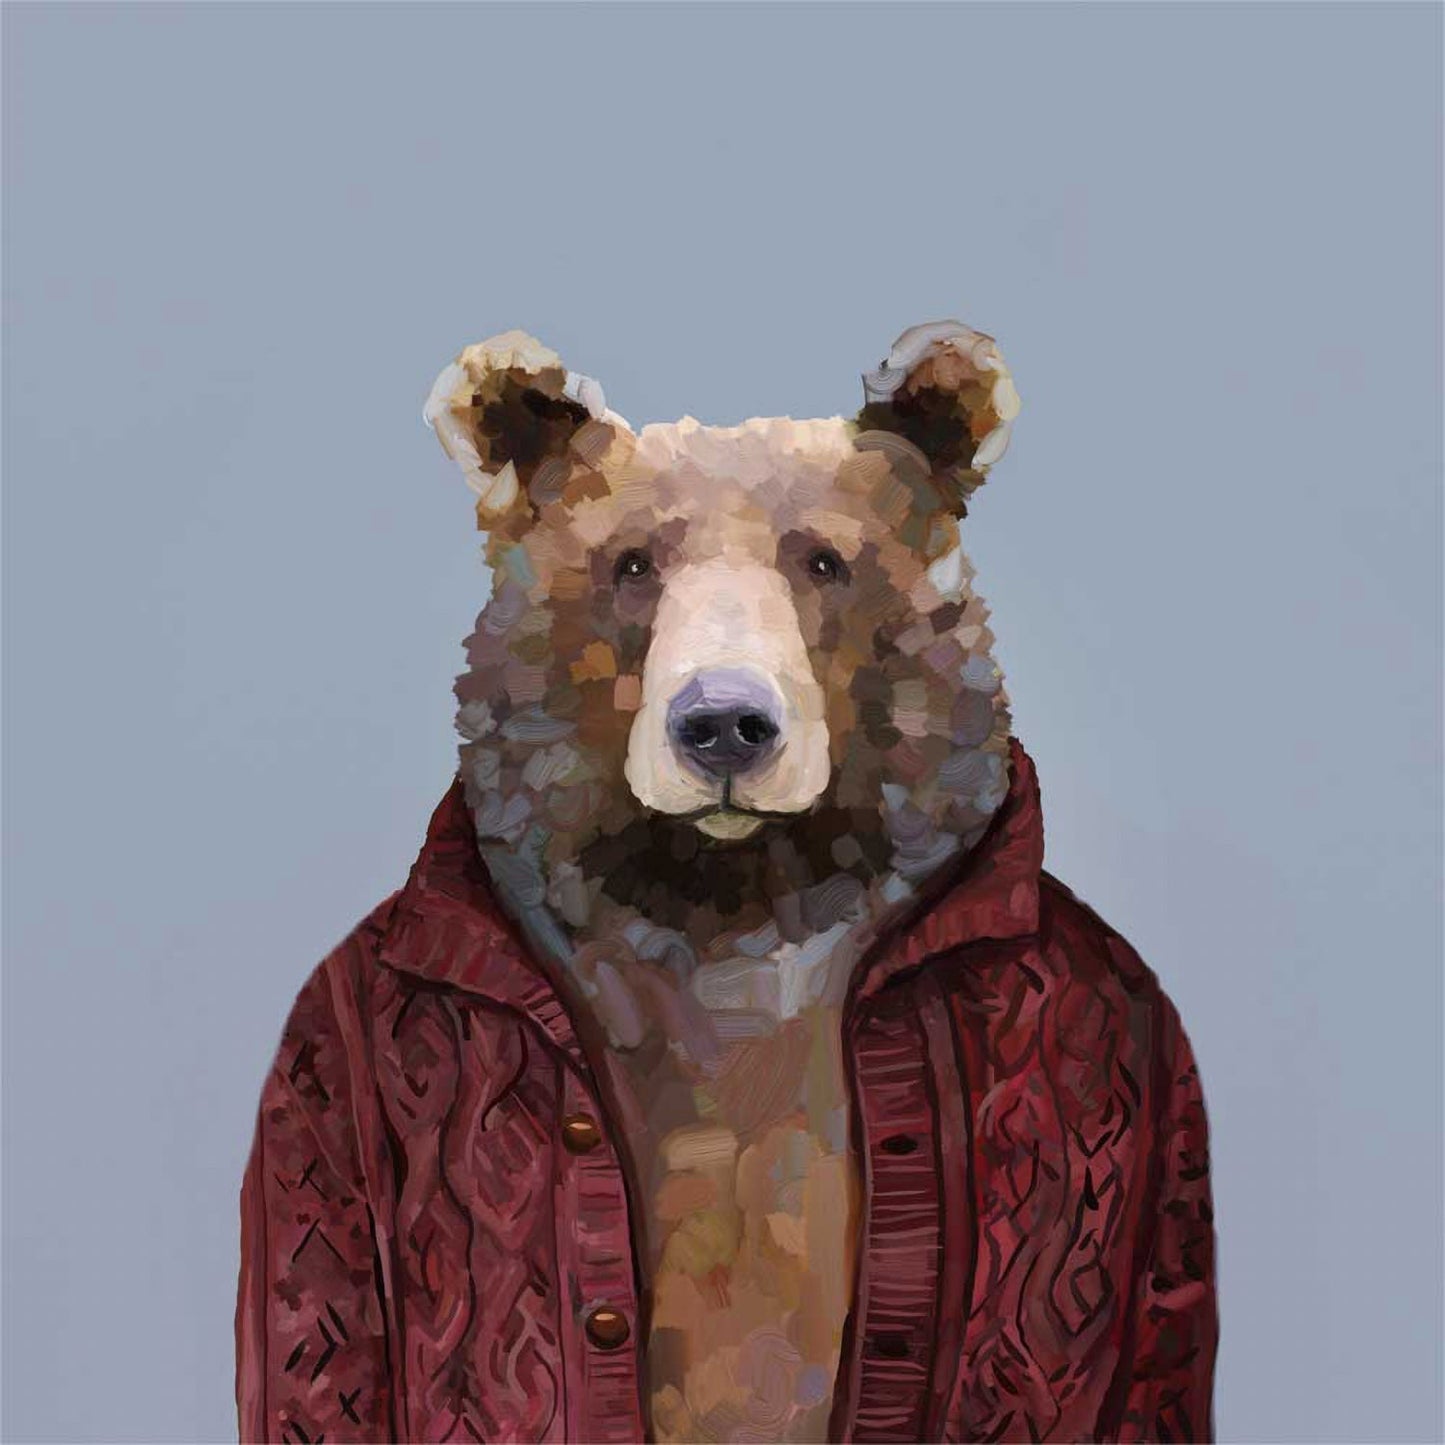 Bears Wear Cardigans Canvas Wall Art - GreenBox Art